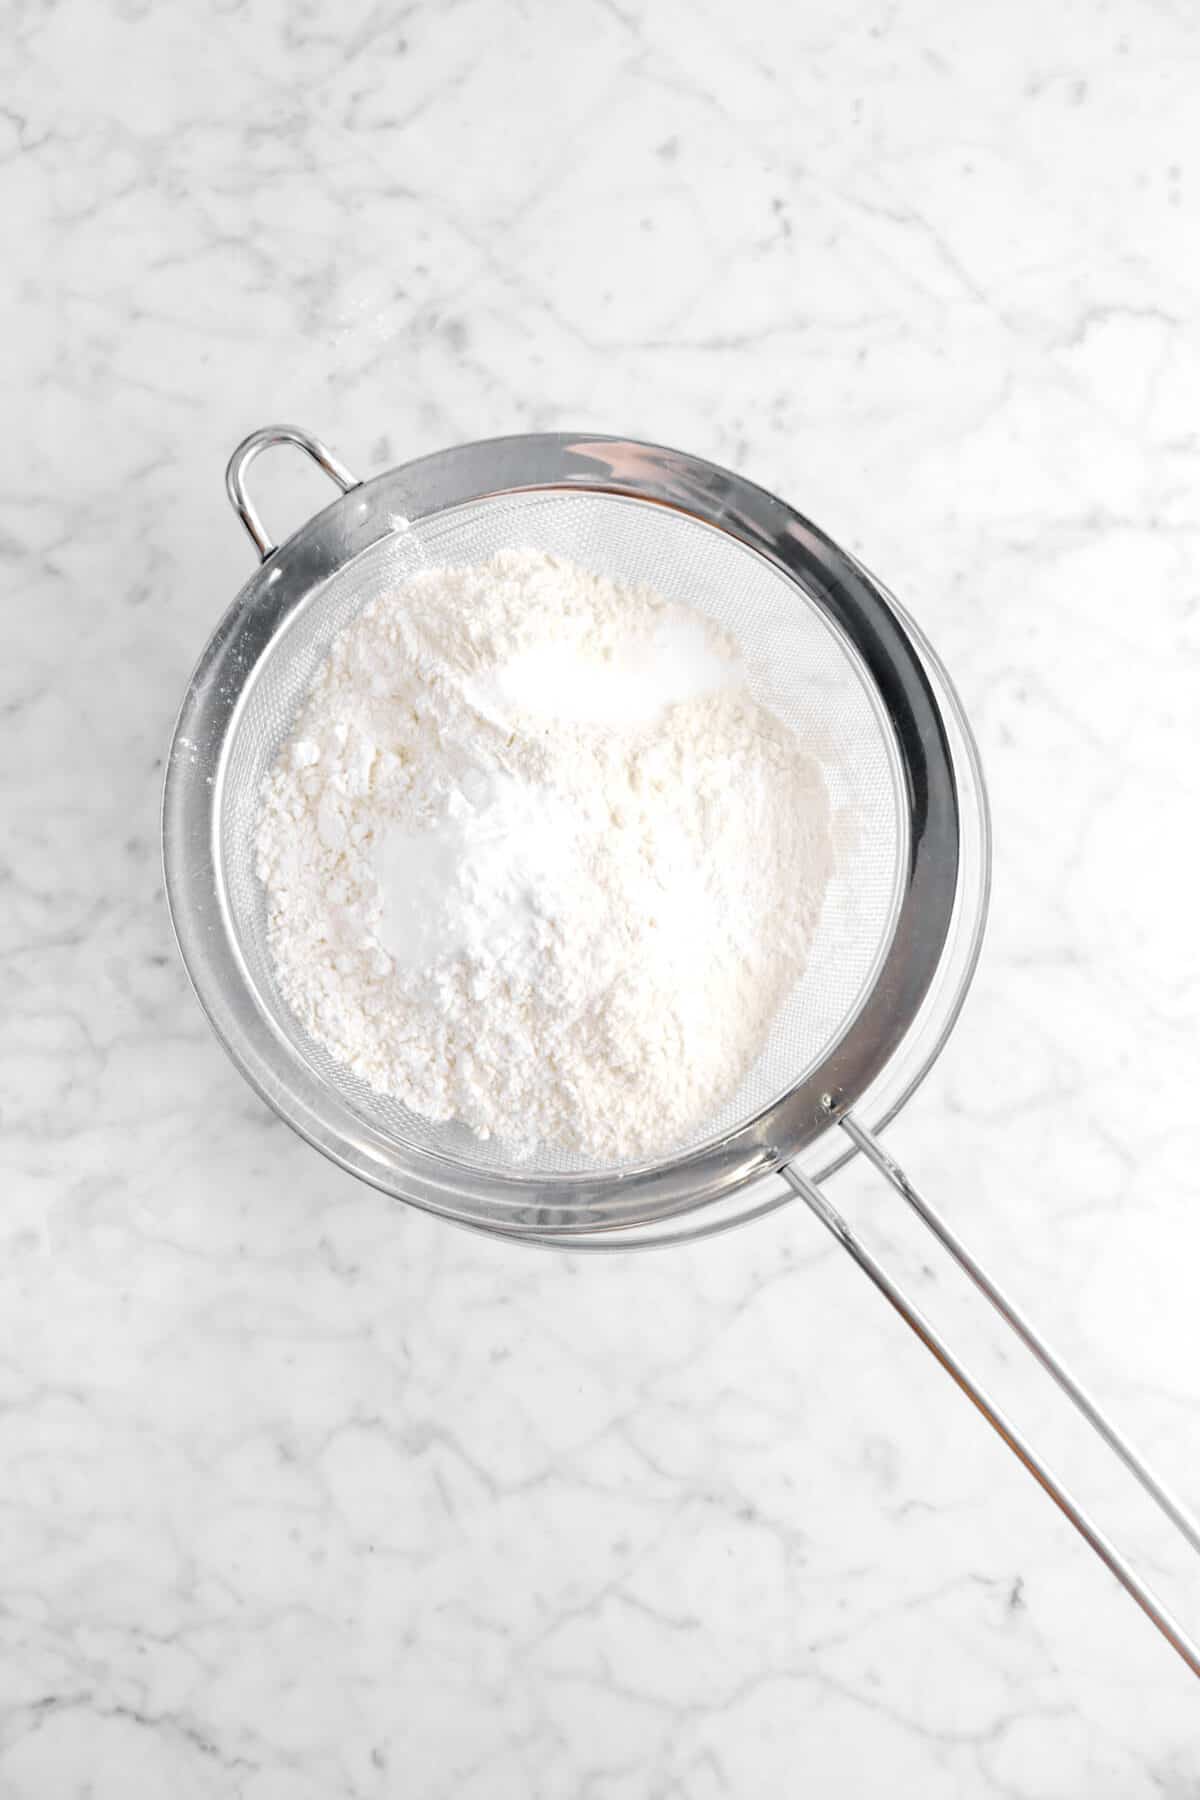 flour, baking powder, baking soda, and salt in a sieve